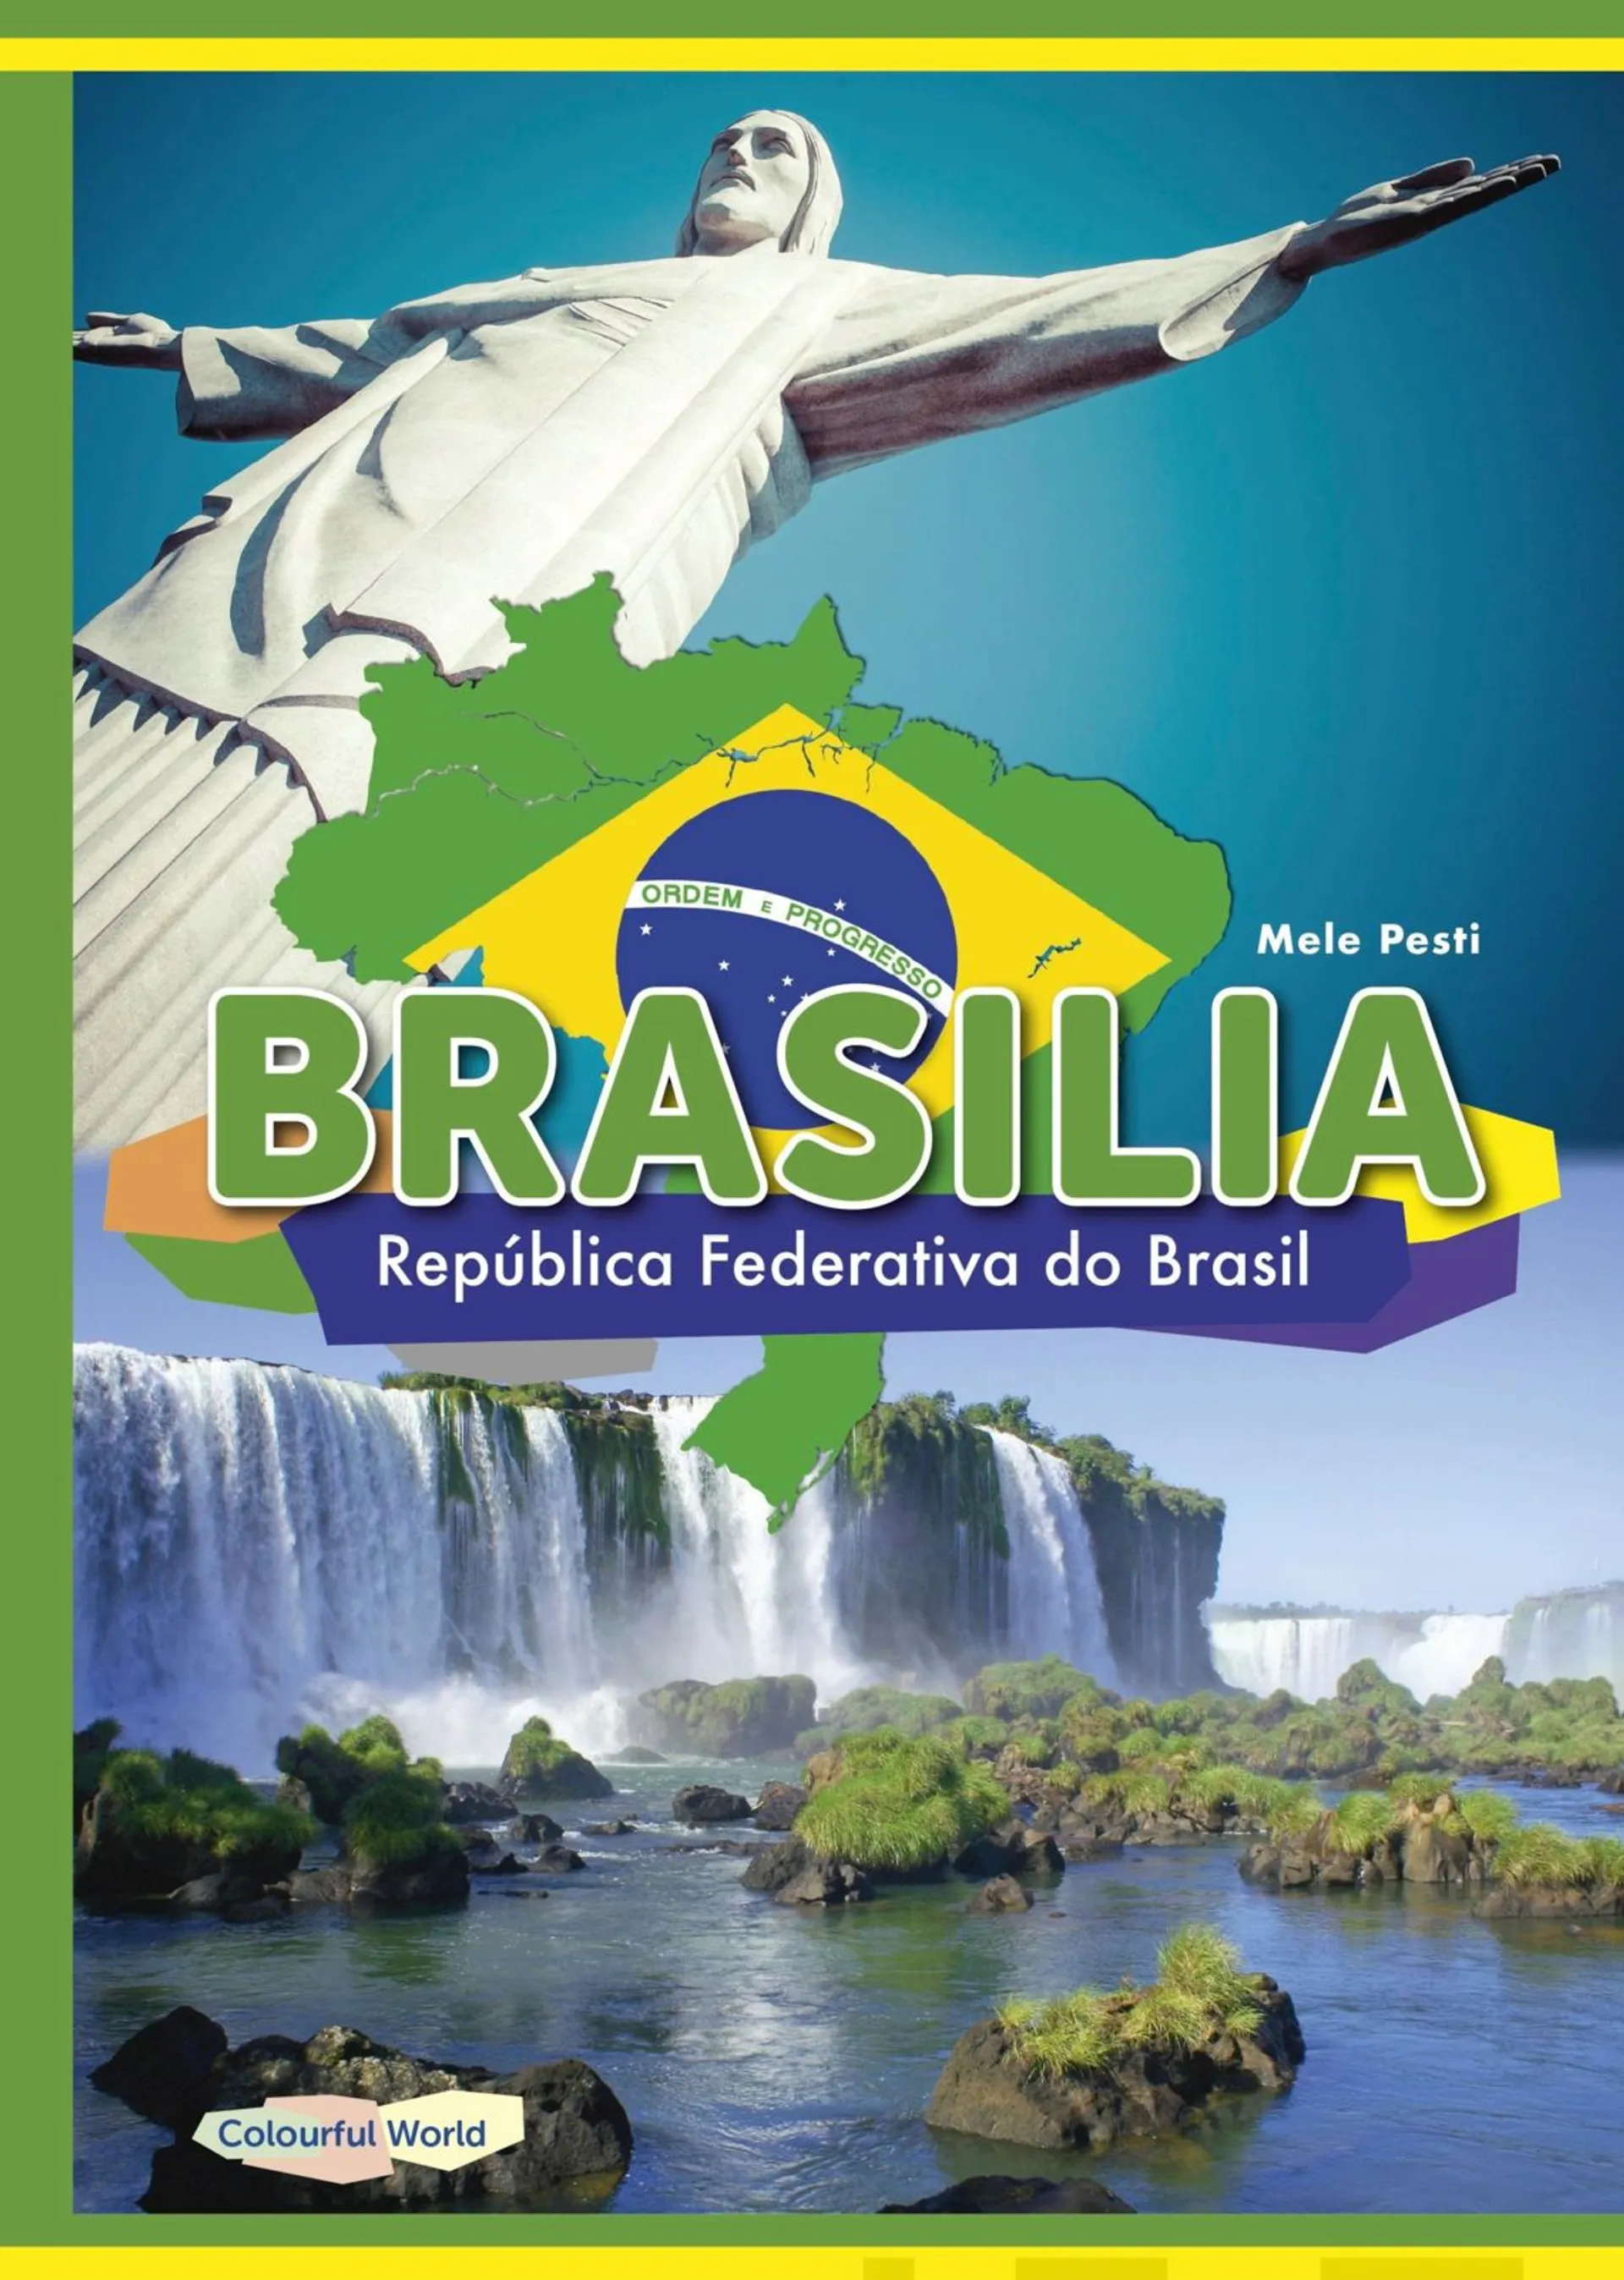 Pesti, BRASILIA - República Federativa do Brasil